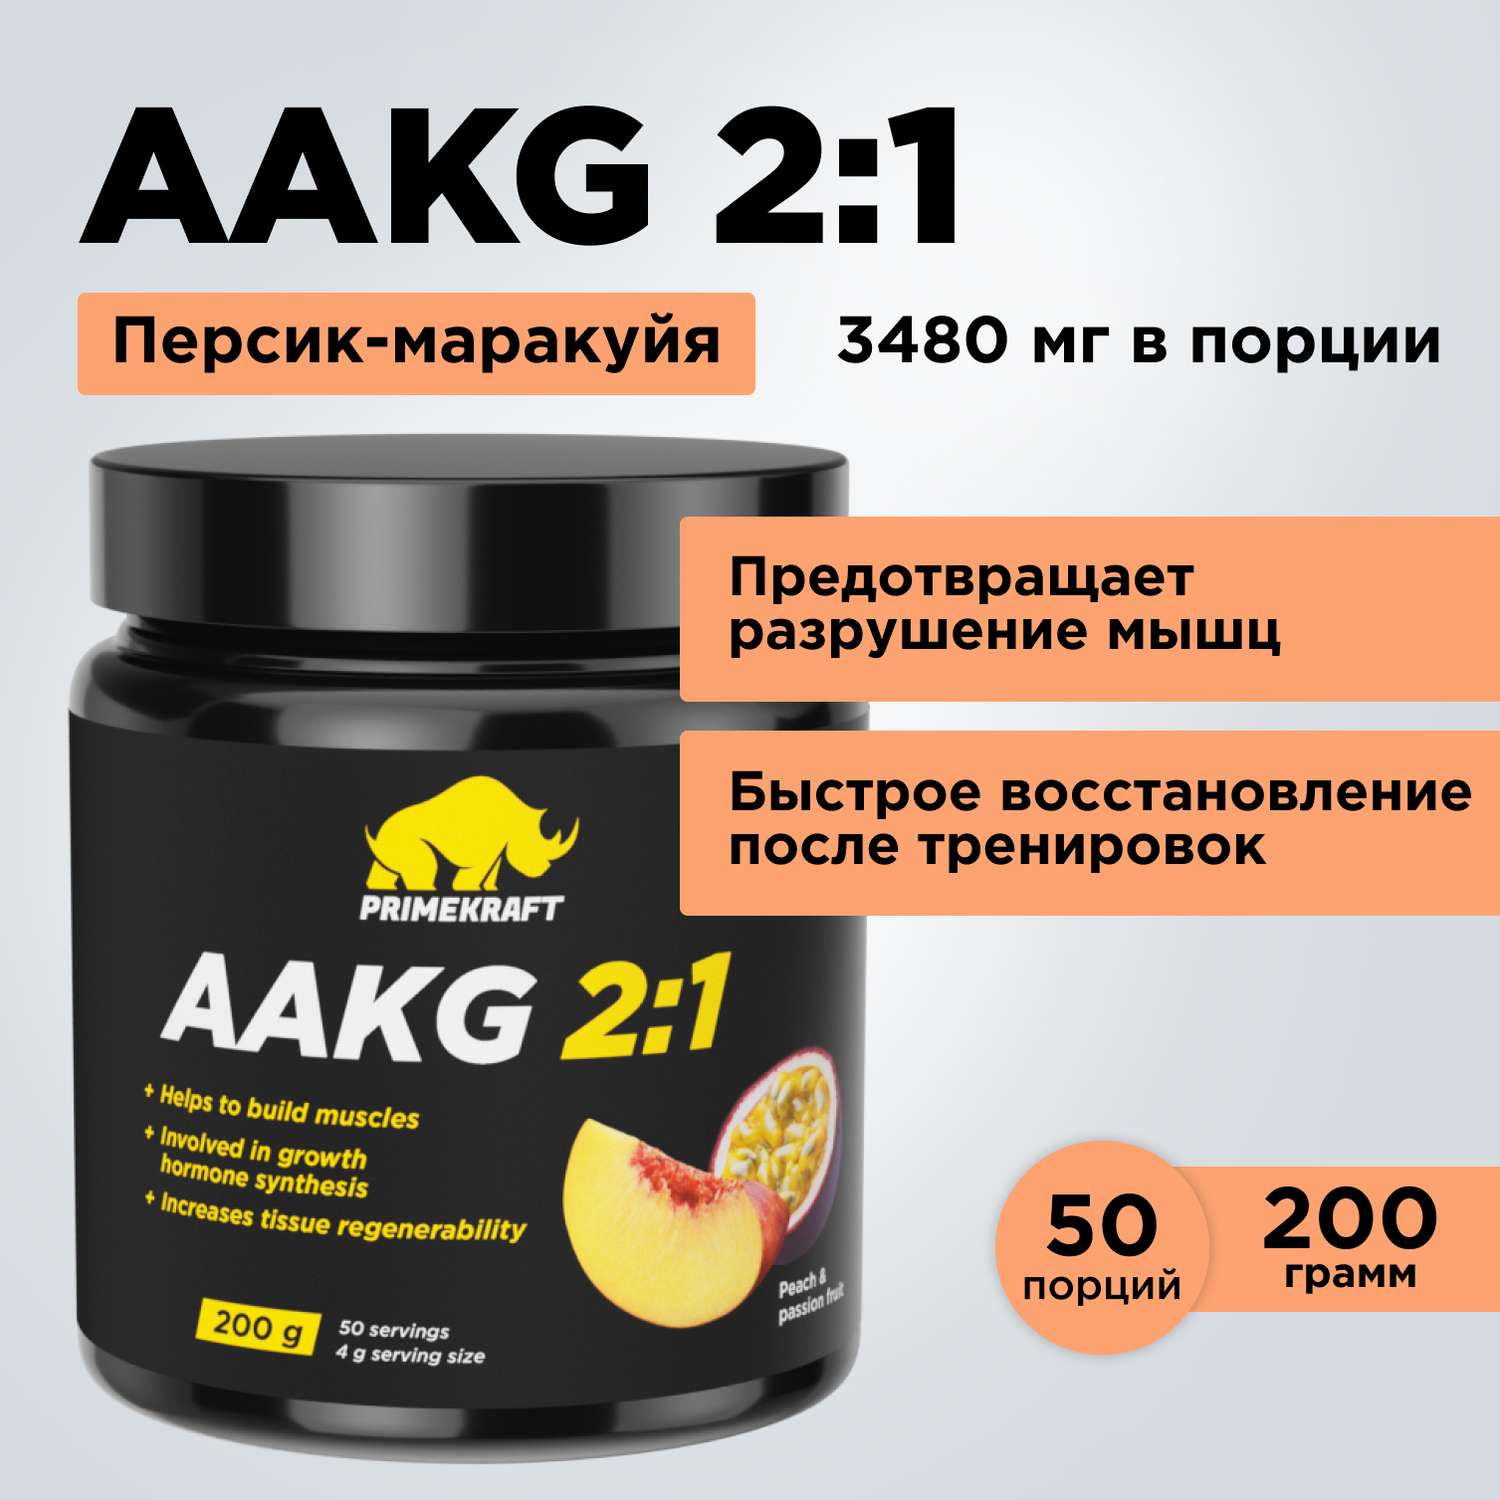 Аргинин AAKG 2:1 Prime Kraft персик-маракуйя 200 г - фото 1